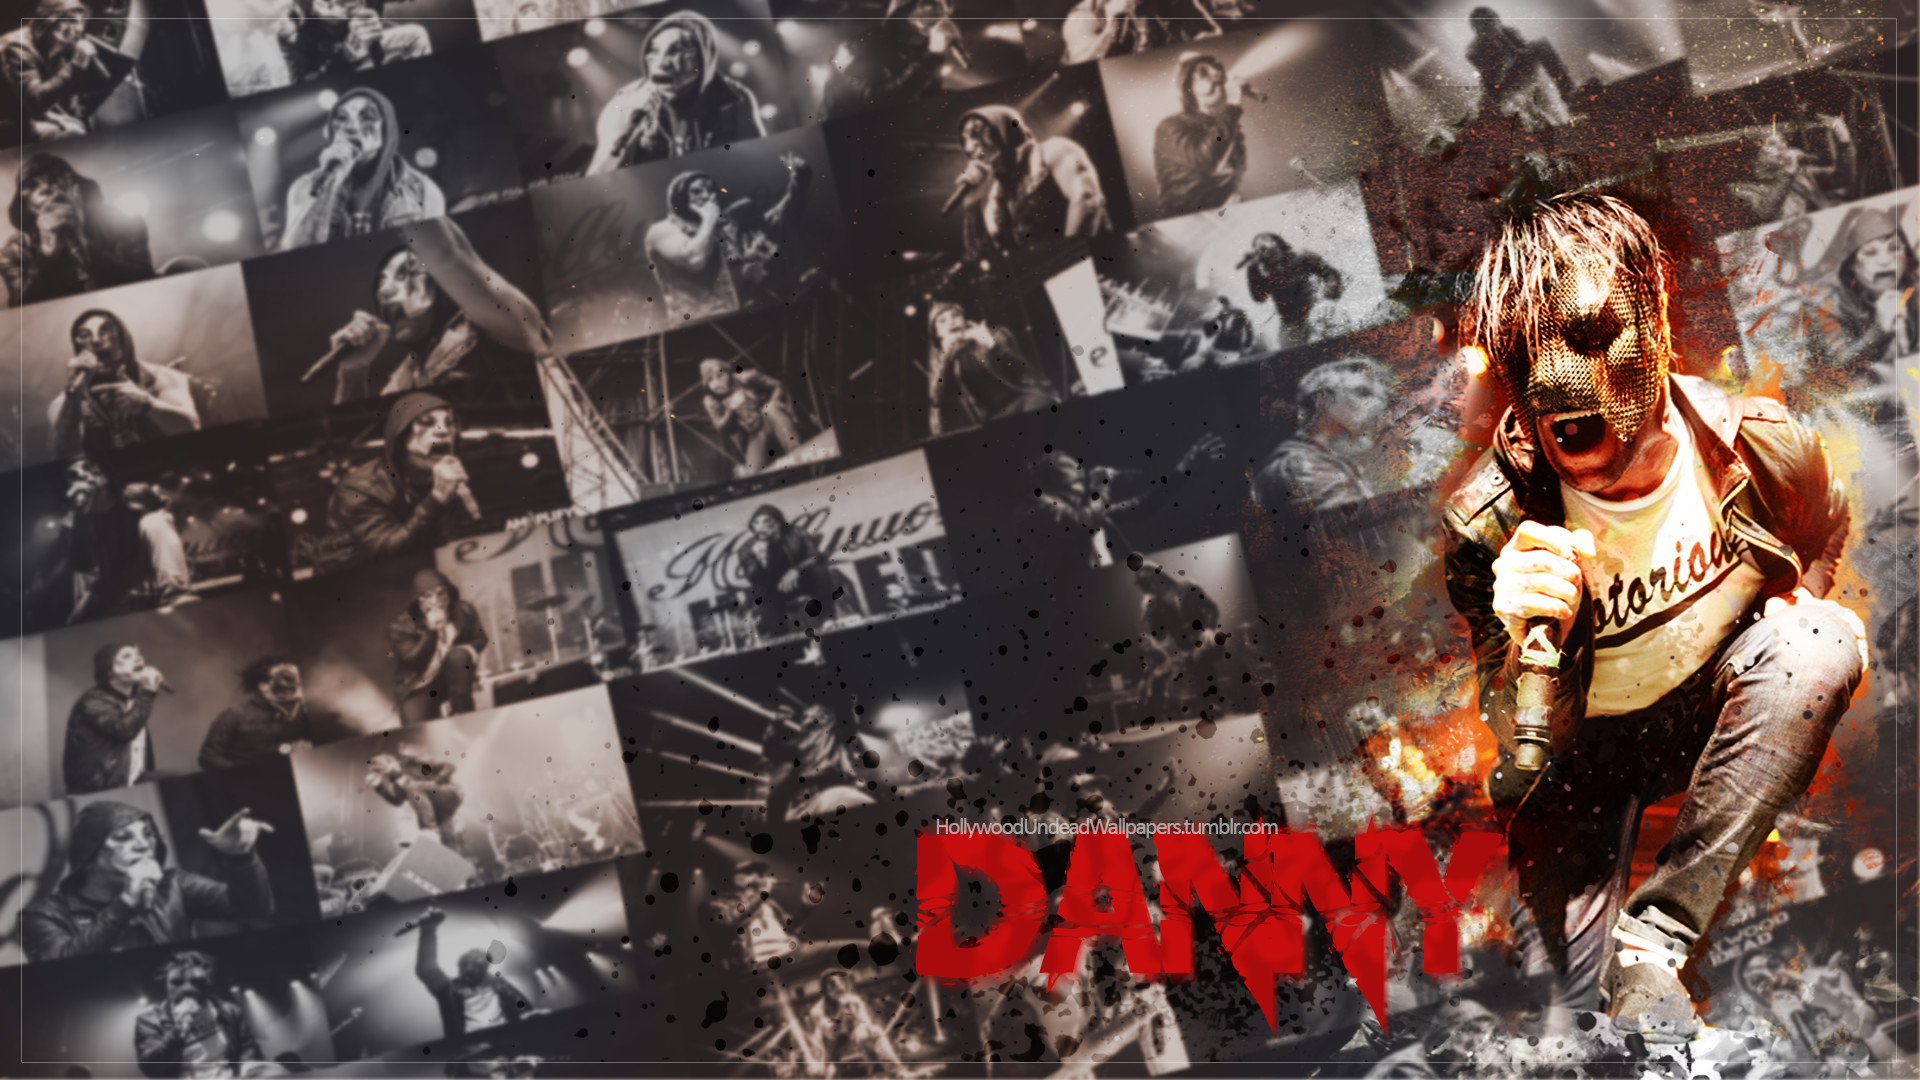 1920x1080 ... Hollywood Undead - Danny Wallpaper by emirulug